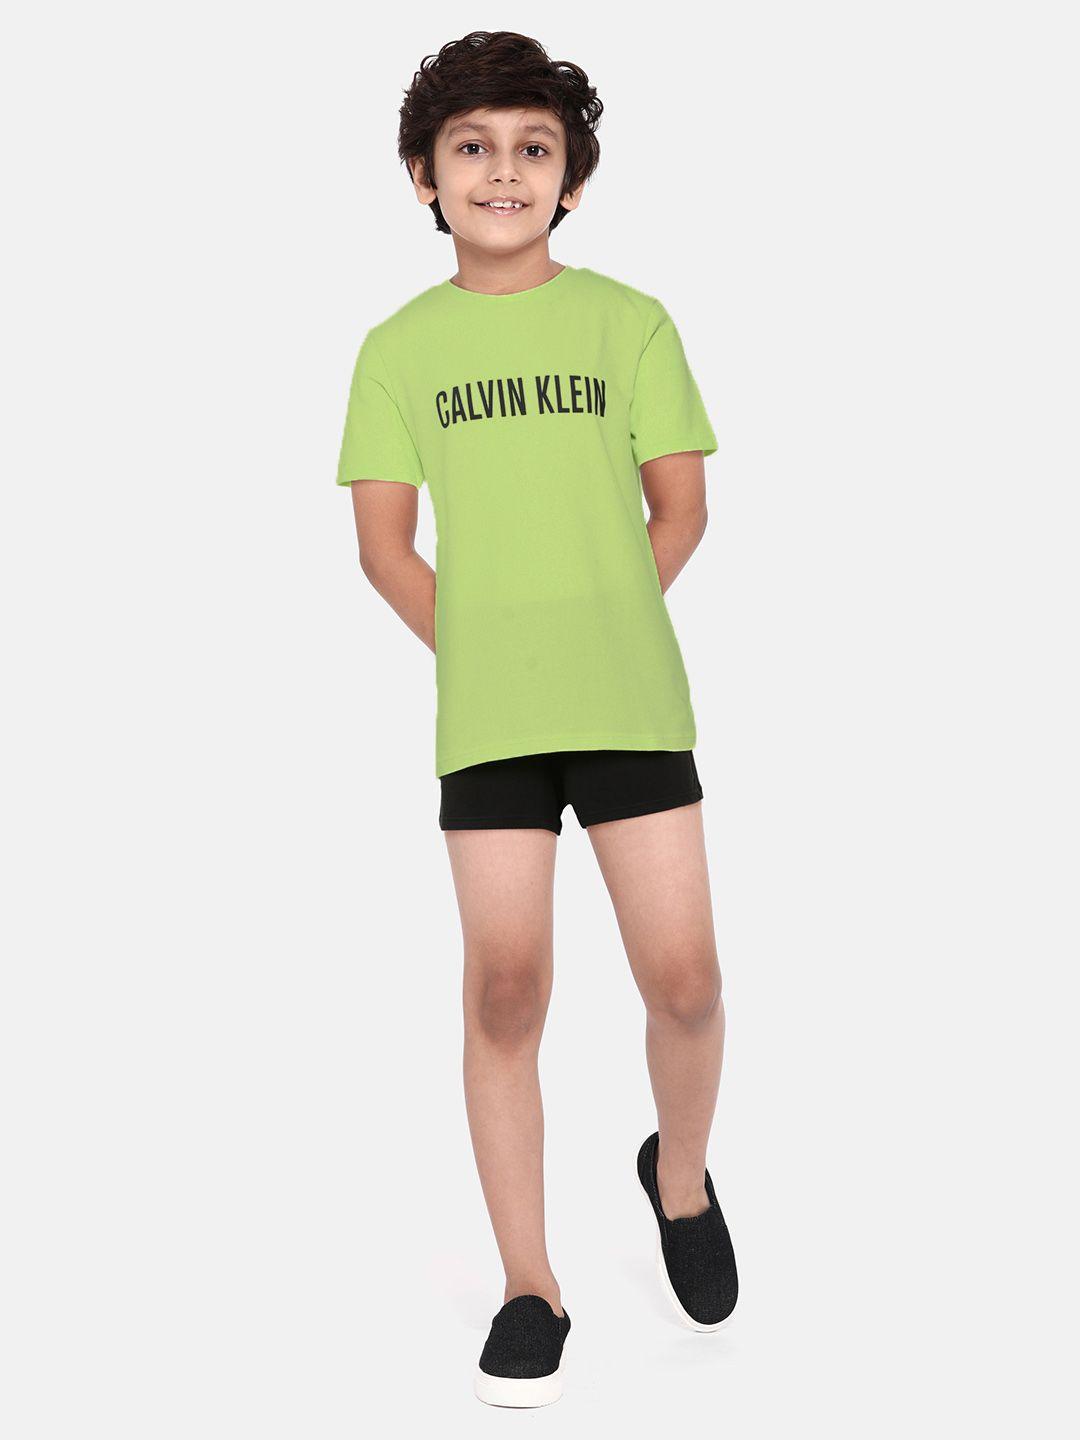 calvin-klein-underwear-boys-lime-green-&-black-printed-t-shirt-with-shorts